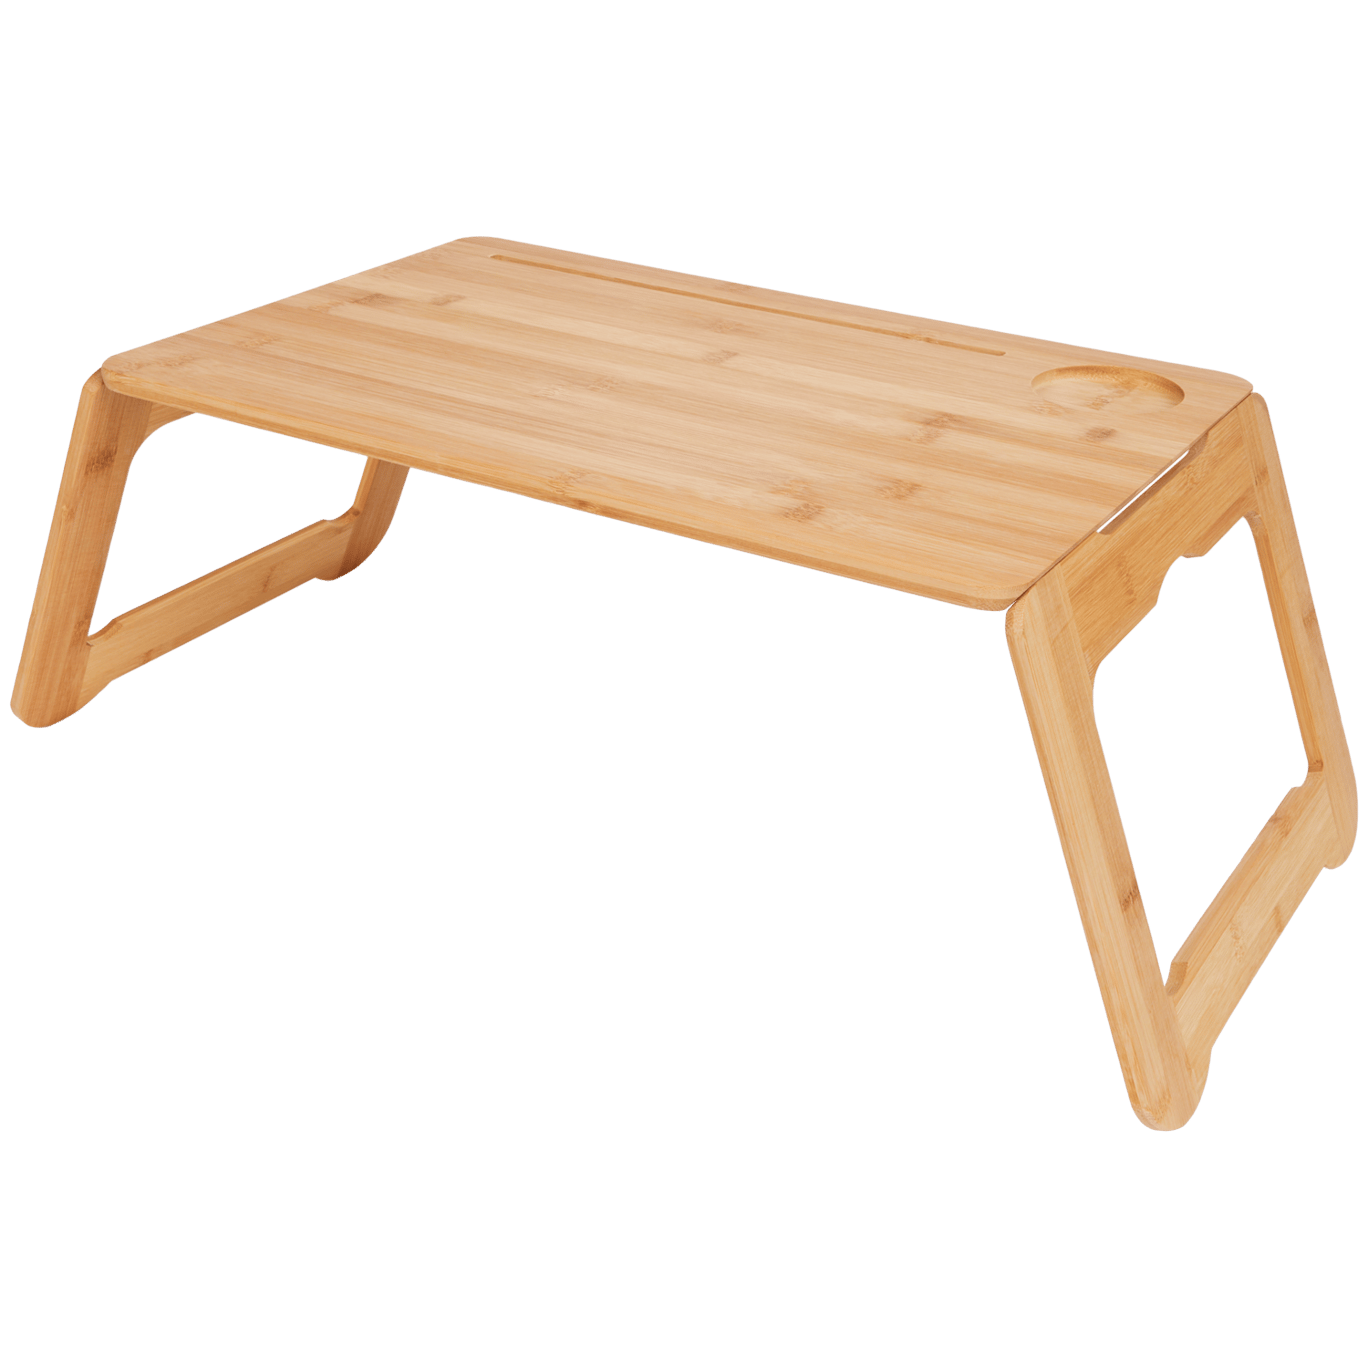 Bambusowy stolik pod laptopa